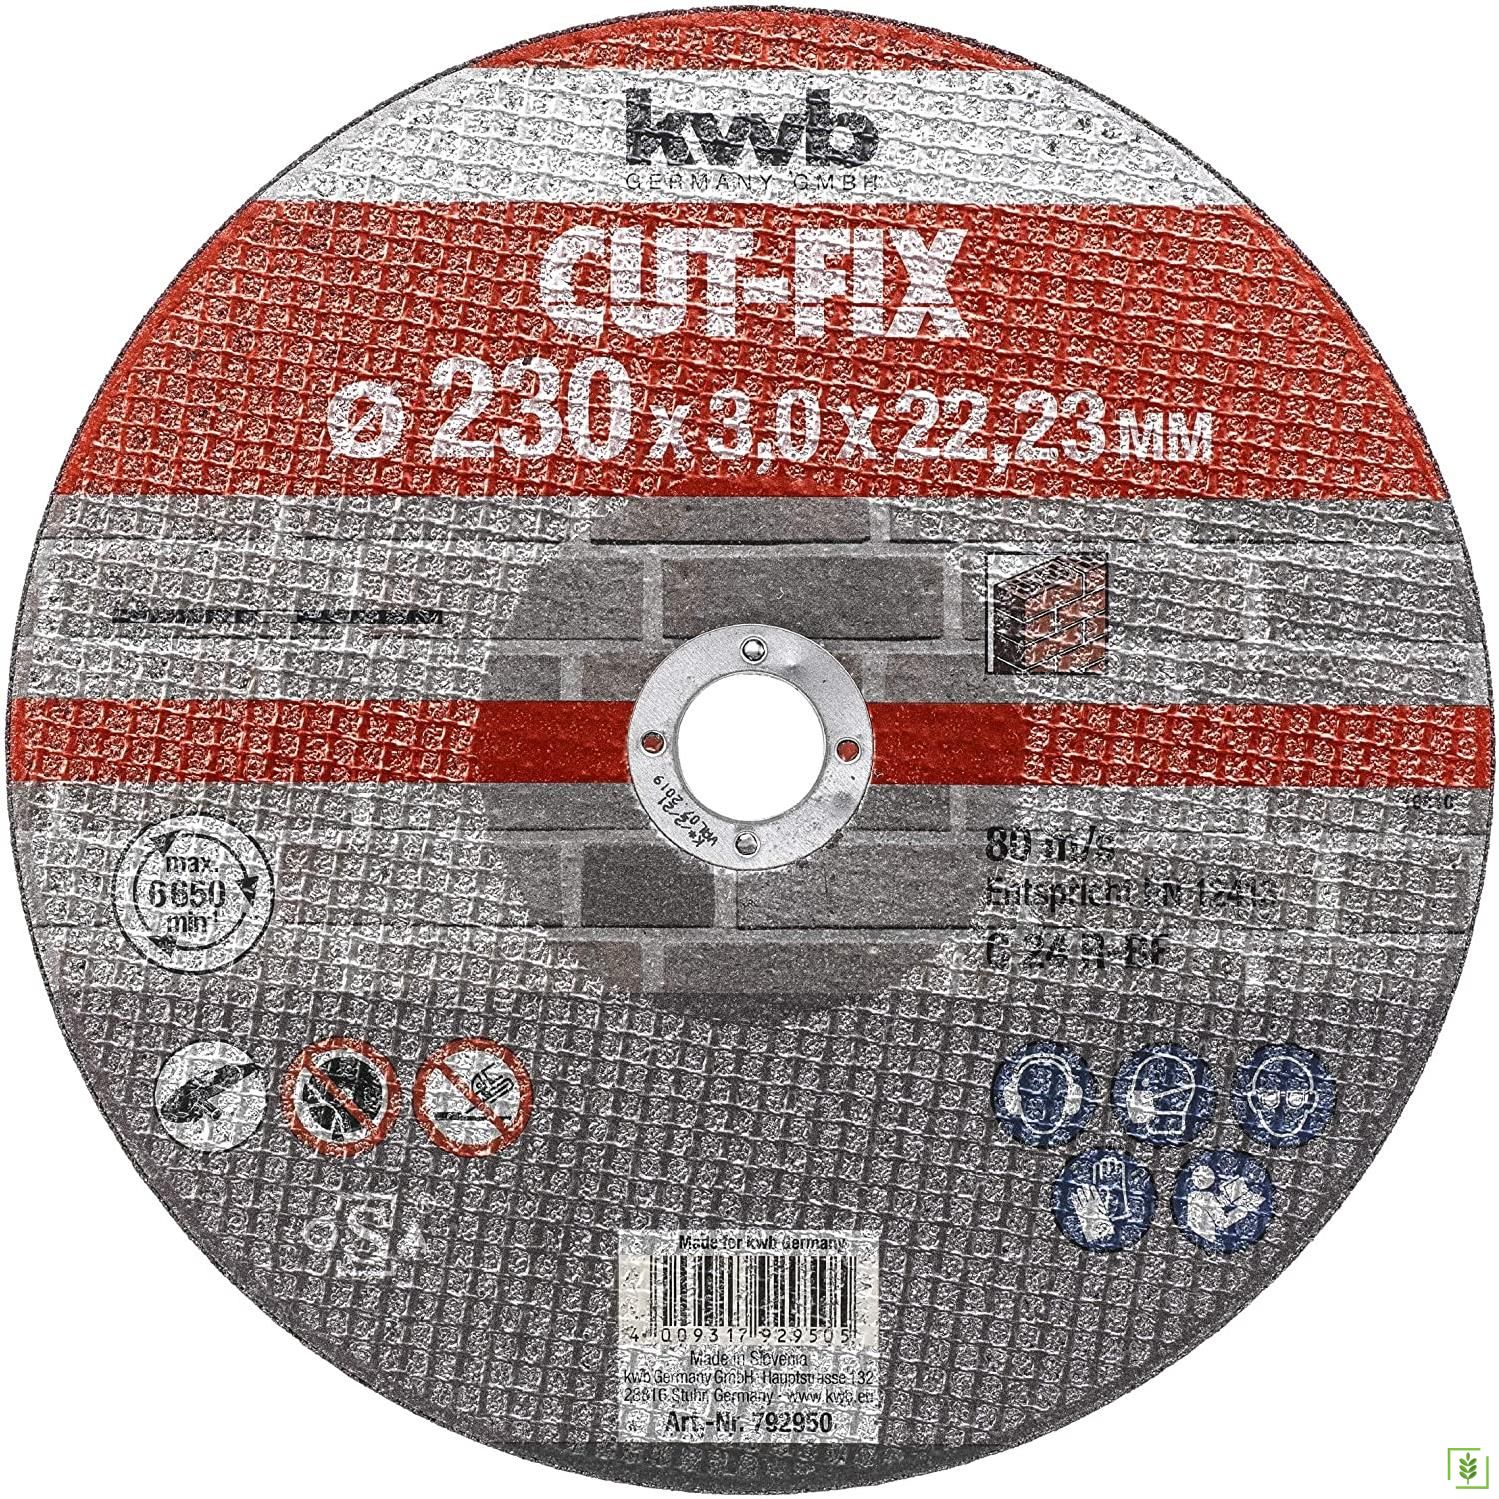 KWB 792950 Flex Taşı Mermer Kesici Disk 230 X 3 X 22 mm